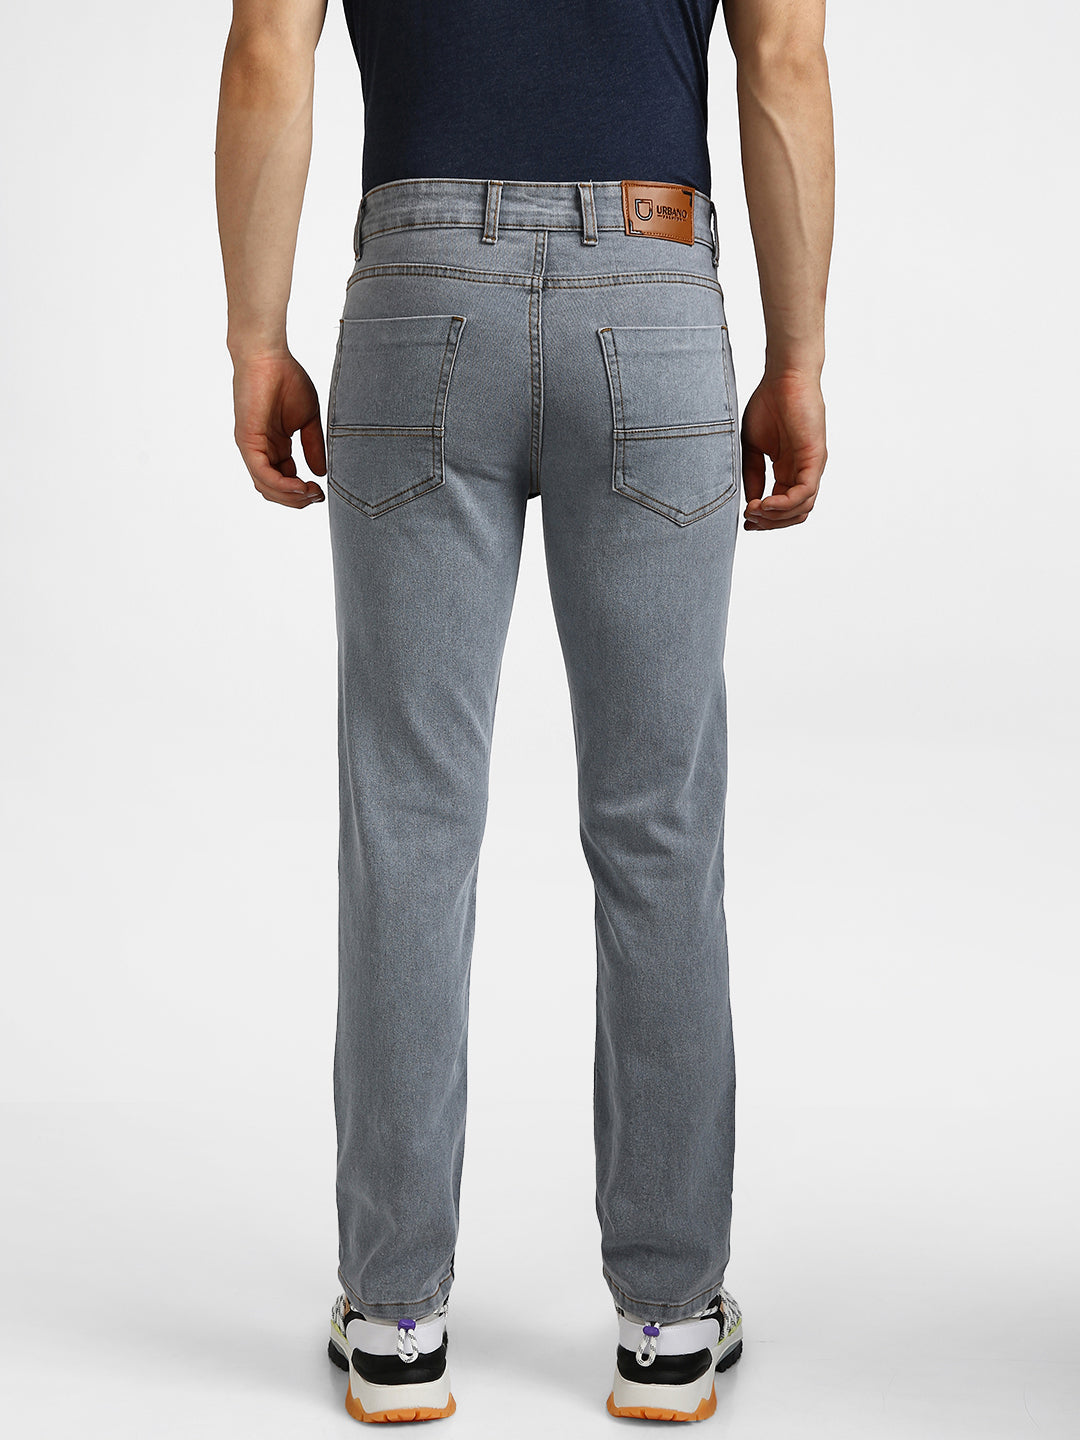 Urbano Fashion Men's Light Grey Regular Fit Washed Jeans Stretchable